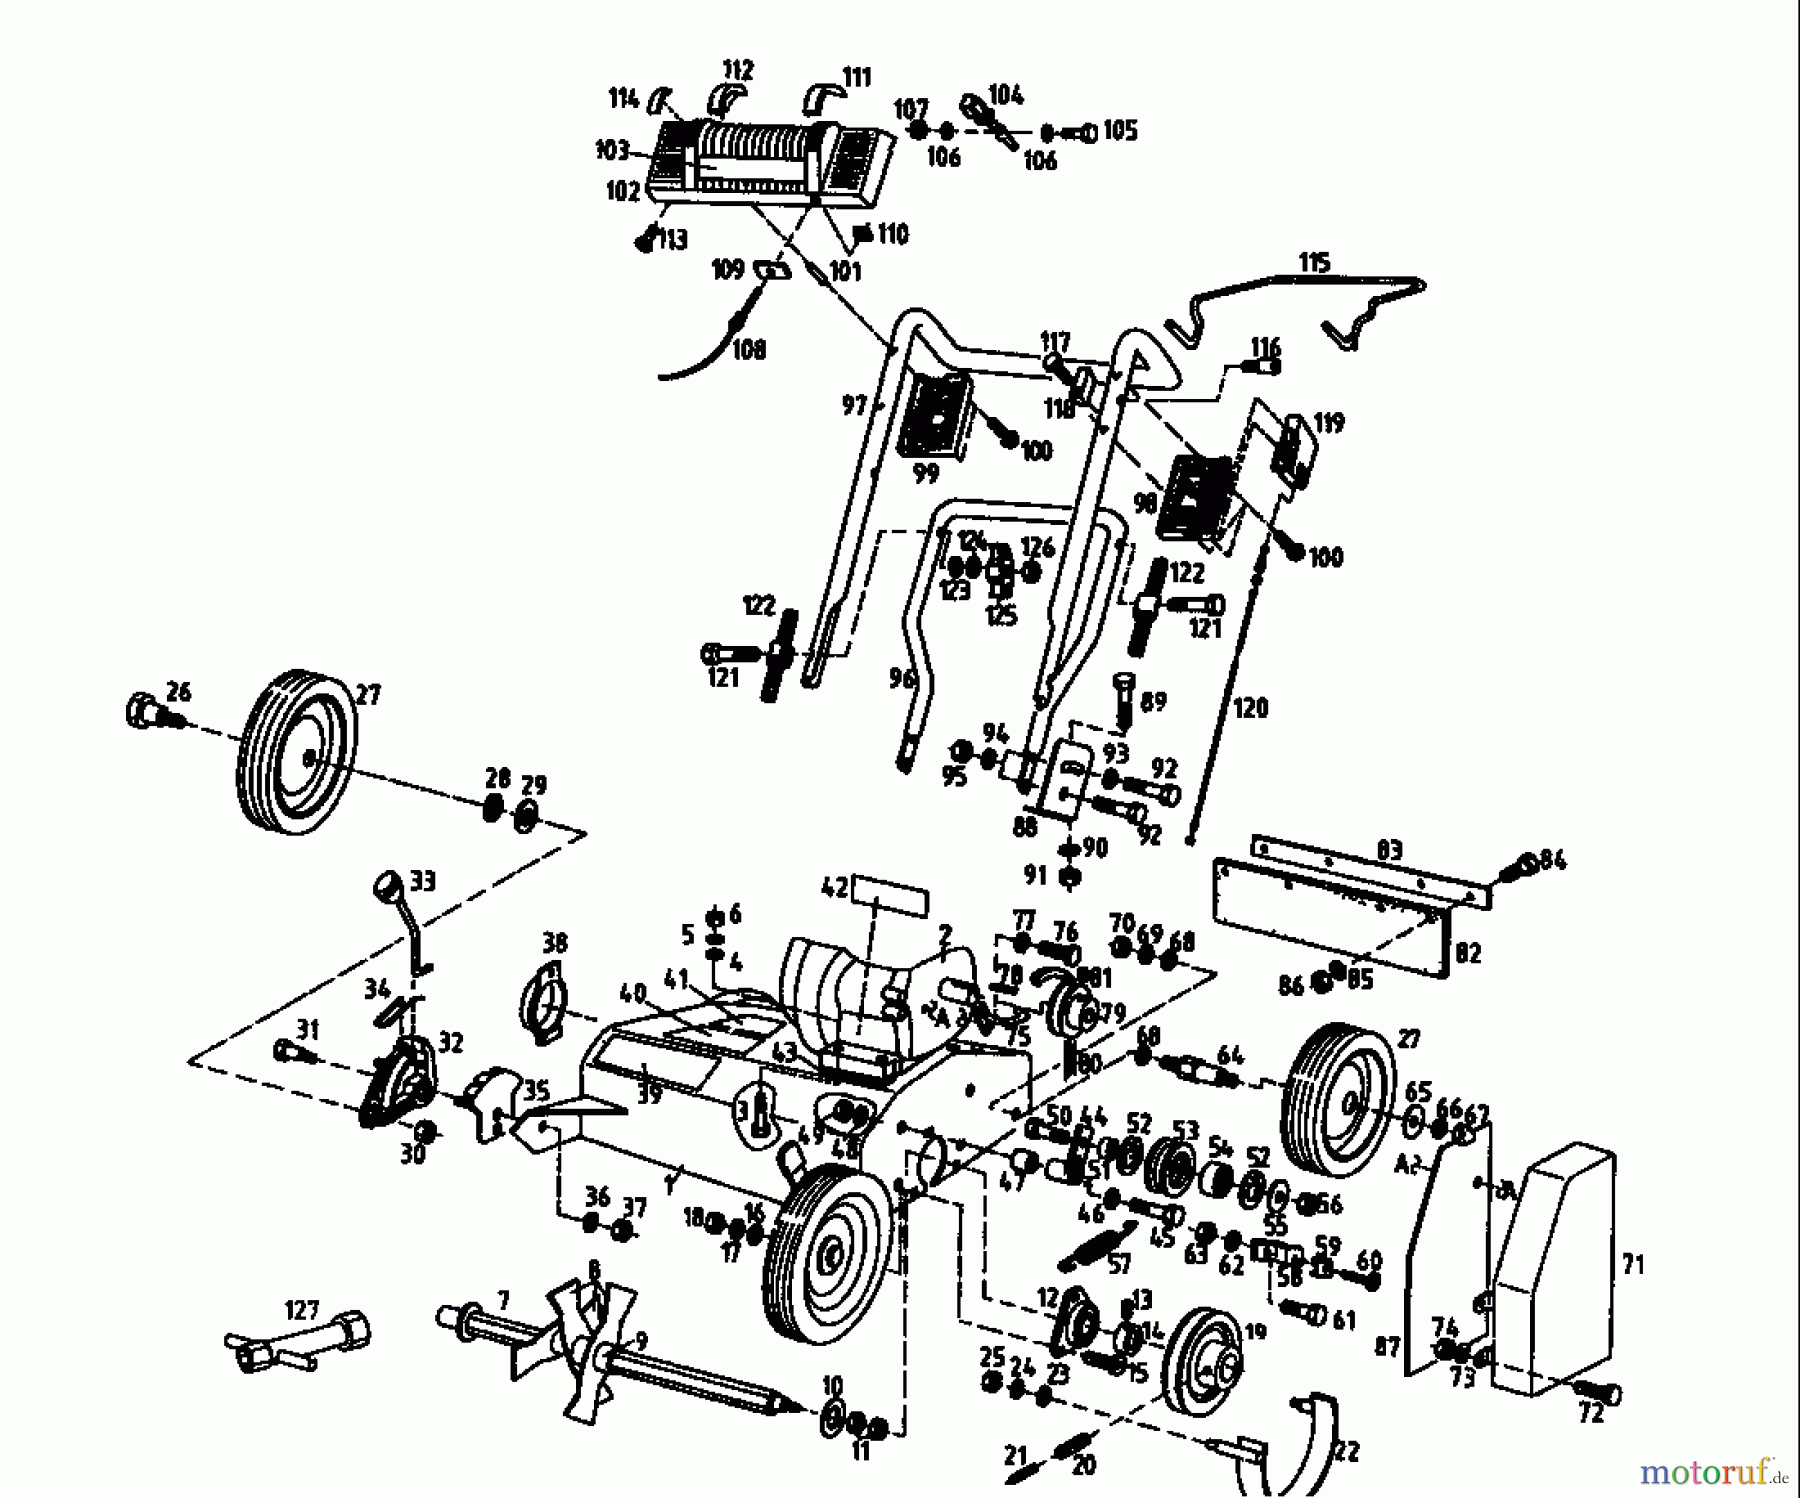  Gutbrod Petrol verticutter MV 504 00053.05  (1994) Basic machine